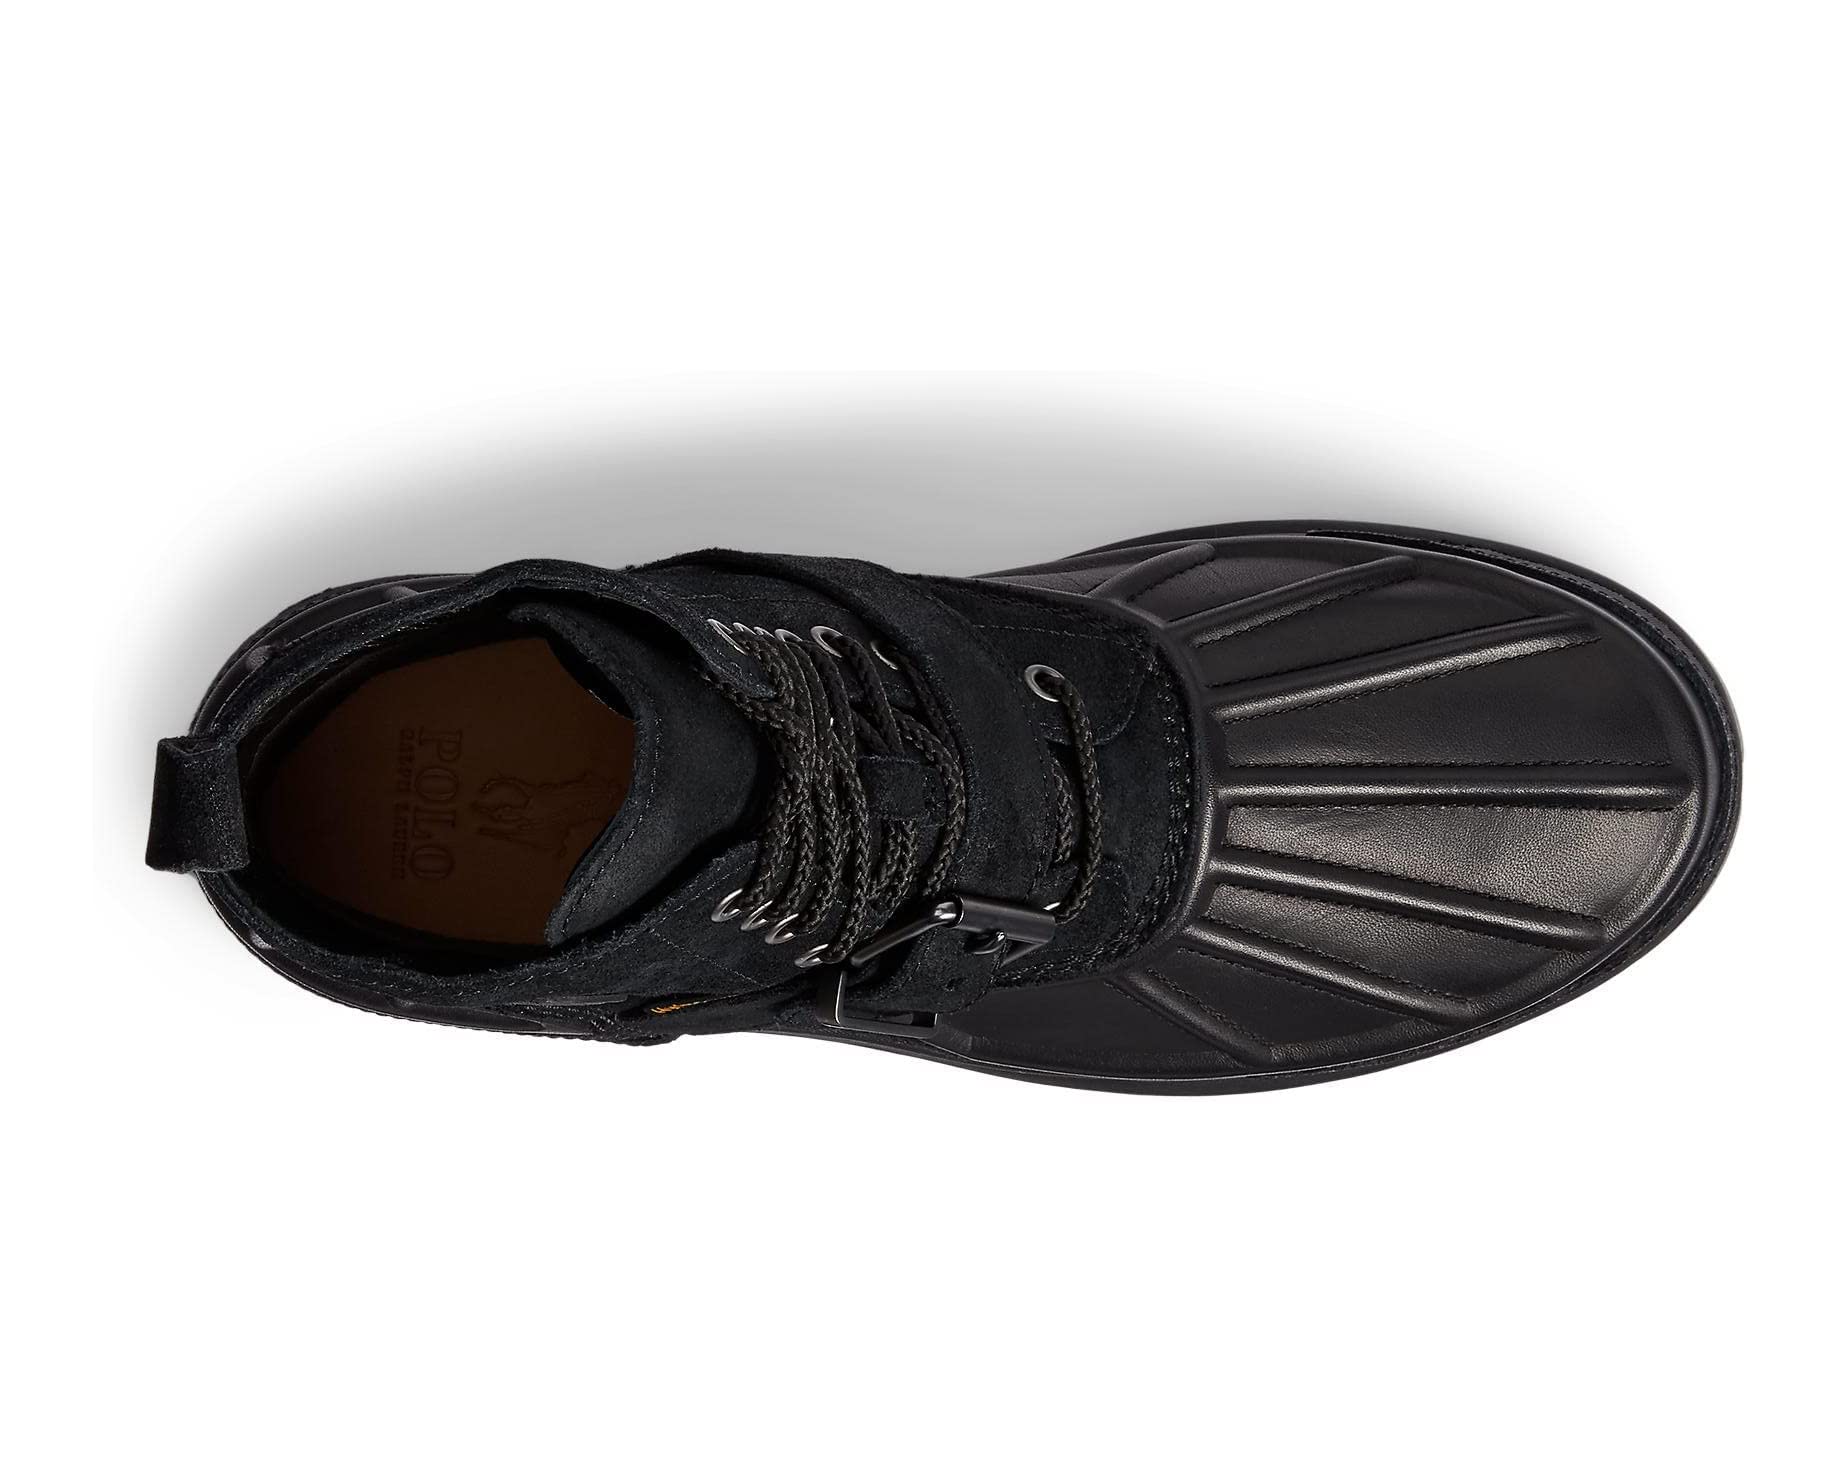 Ботинки Oslo High Boot Polo Ralph Lauren, черный ботинки oslo tactical boot polo ralph lauren черный